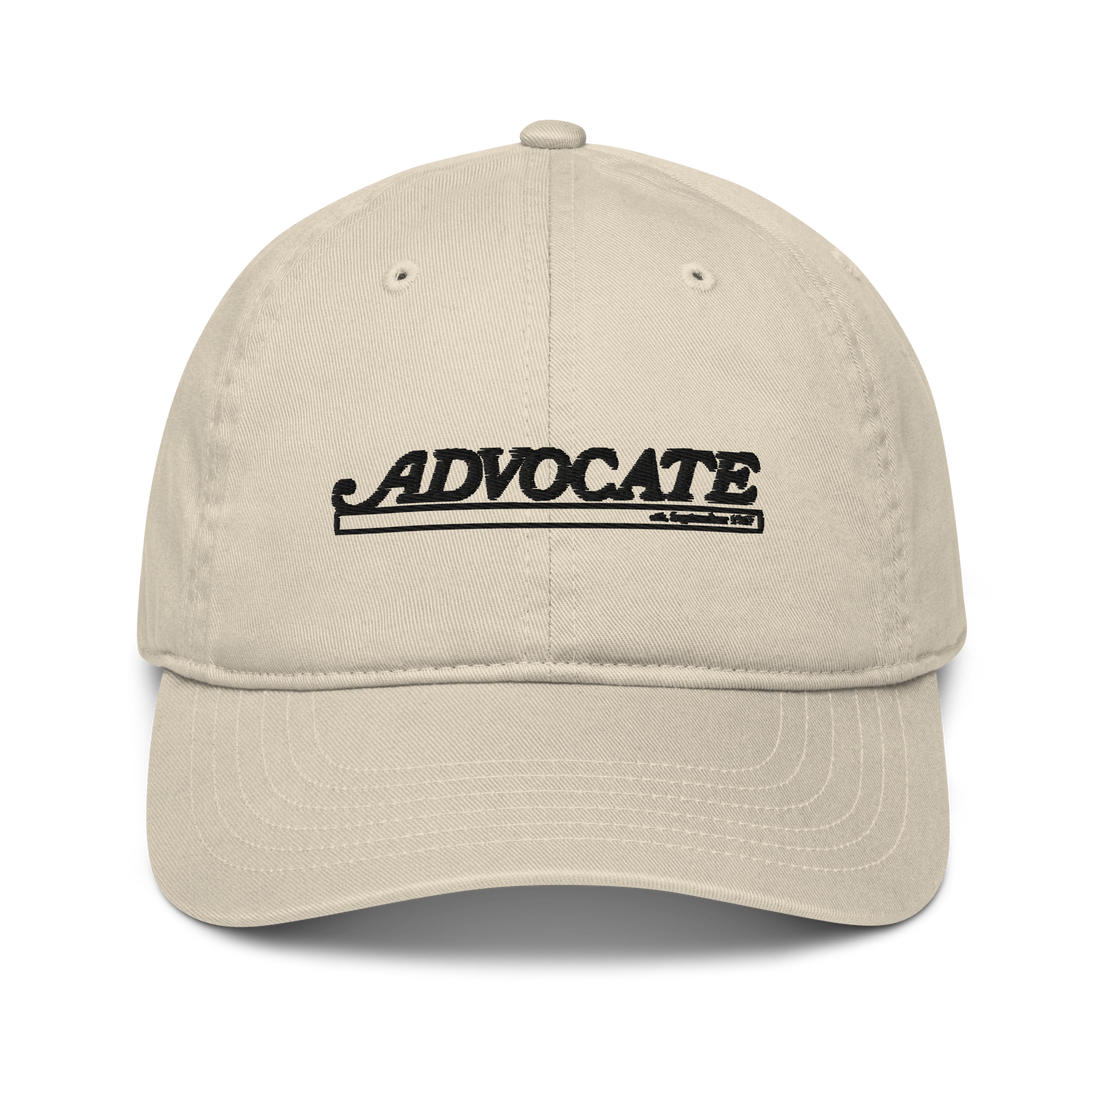 The Advocate Headline Organic Dad Hat